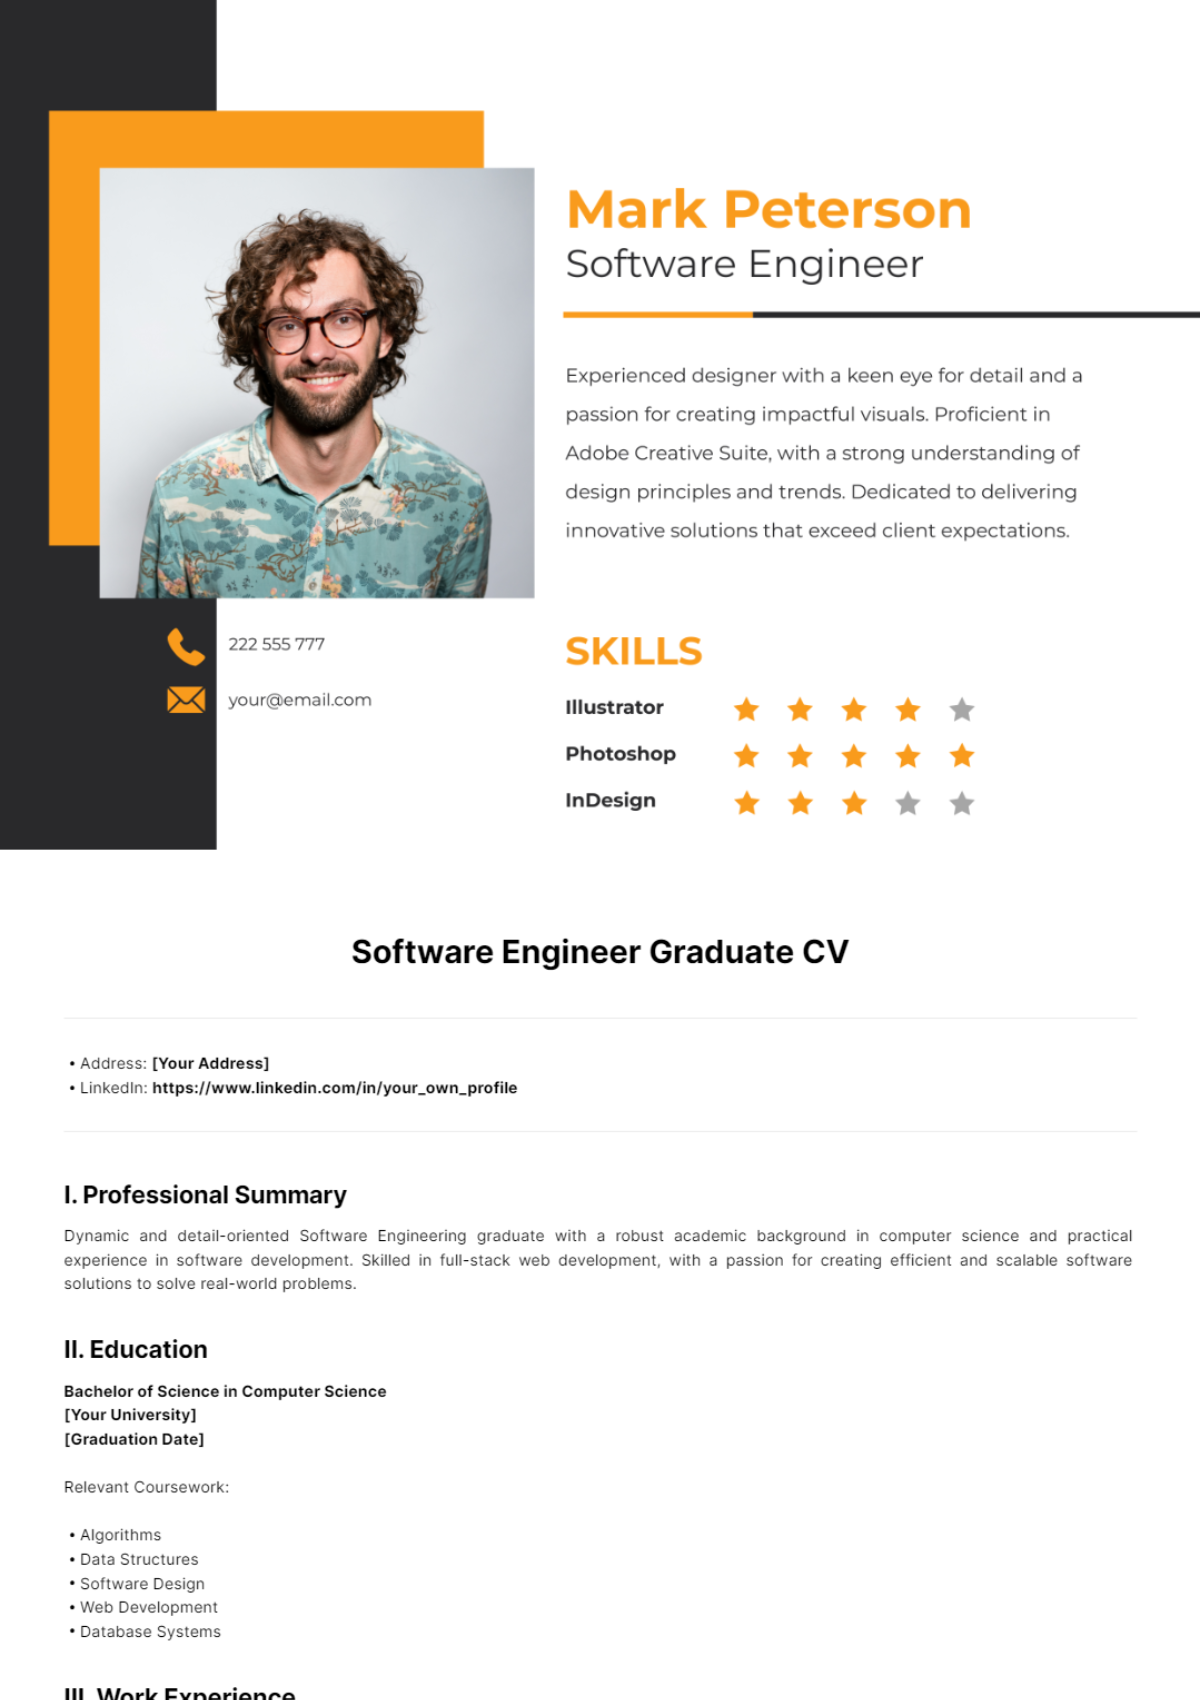 Free Software Engineer Graduate CV Template